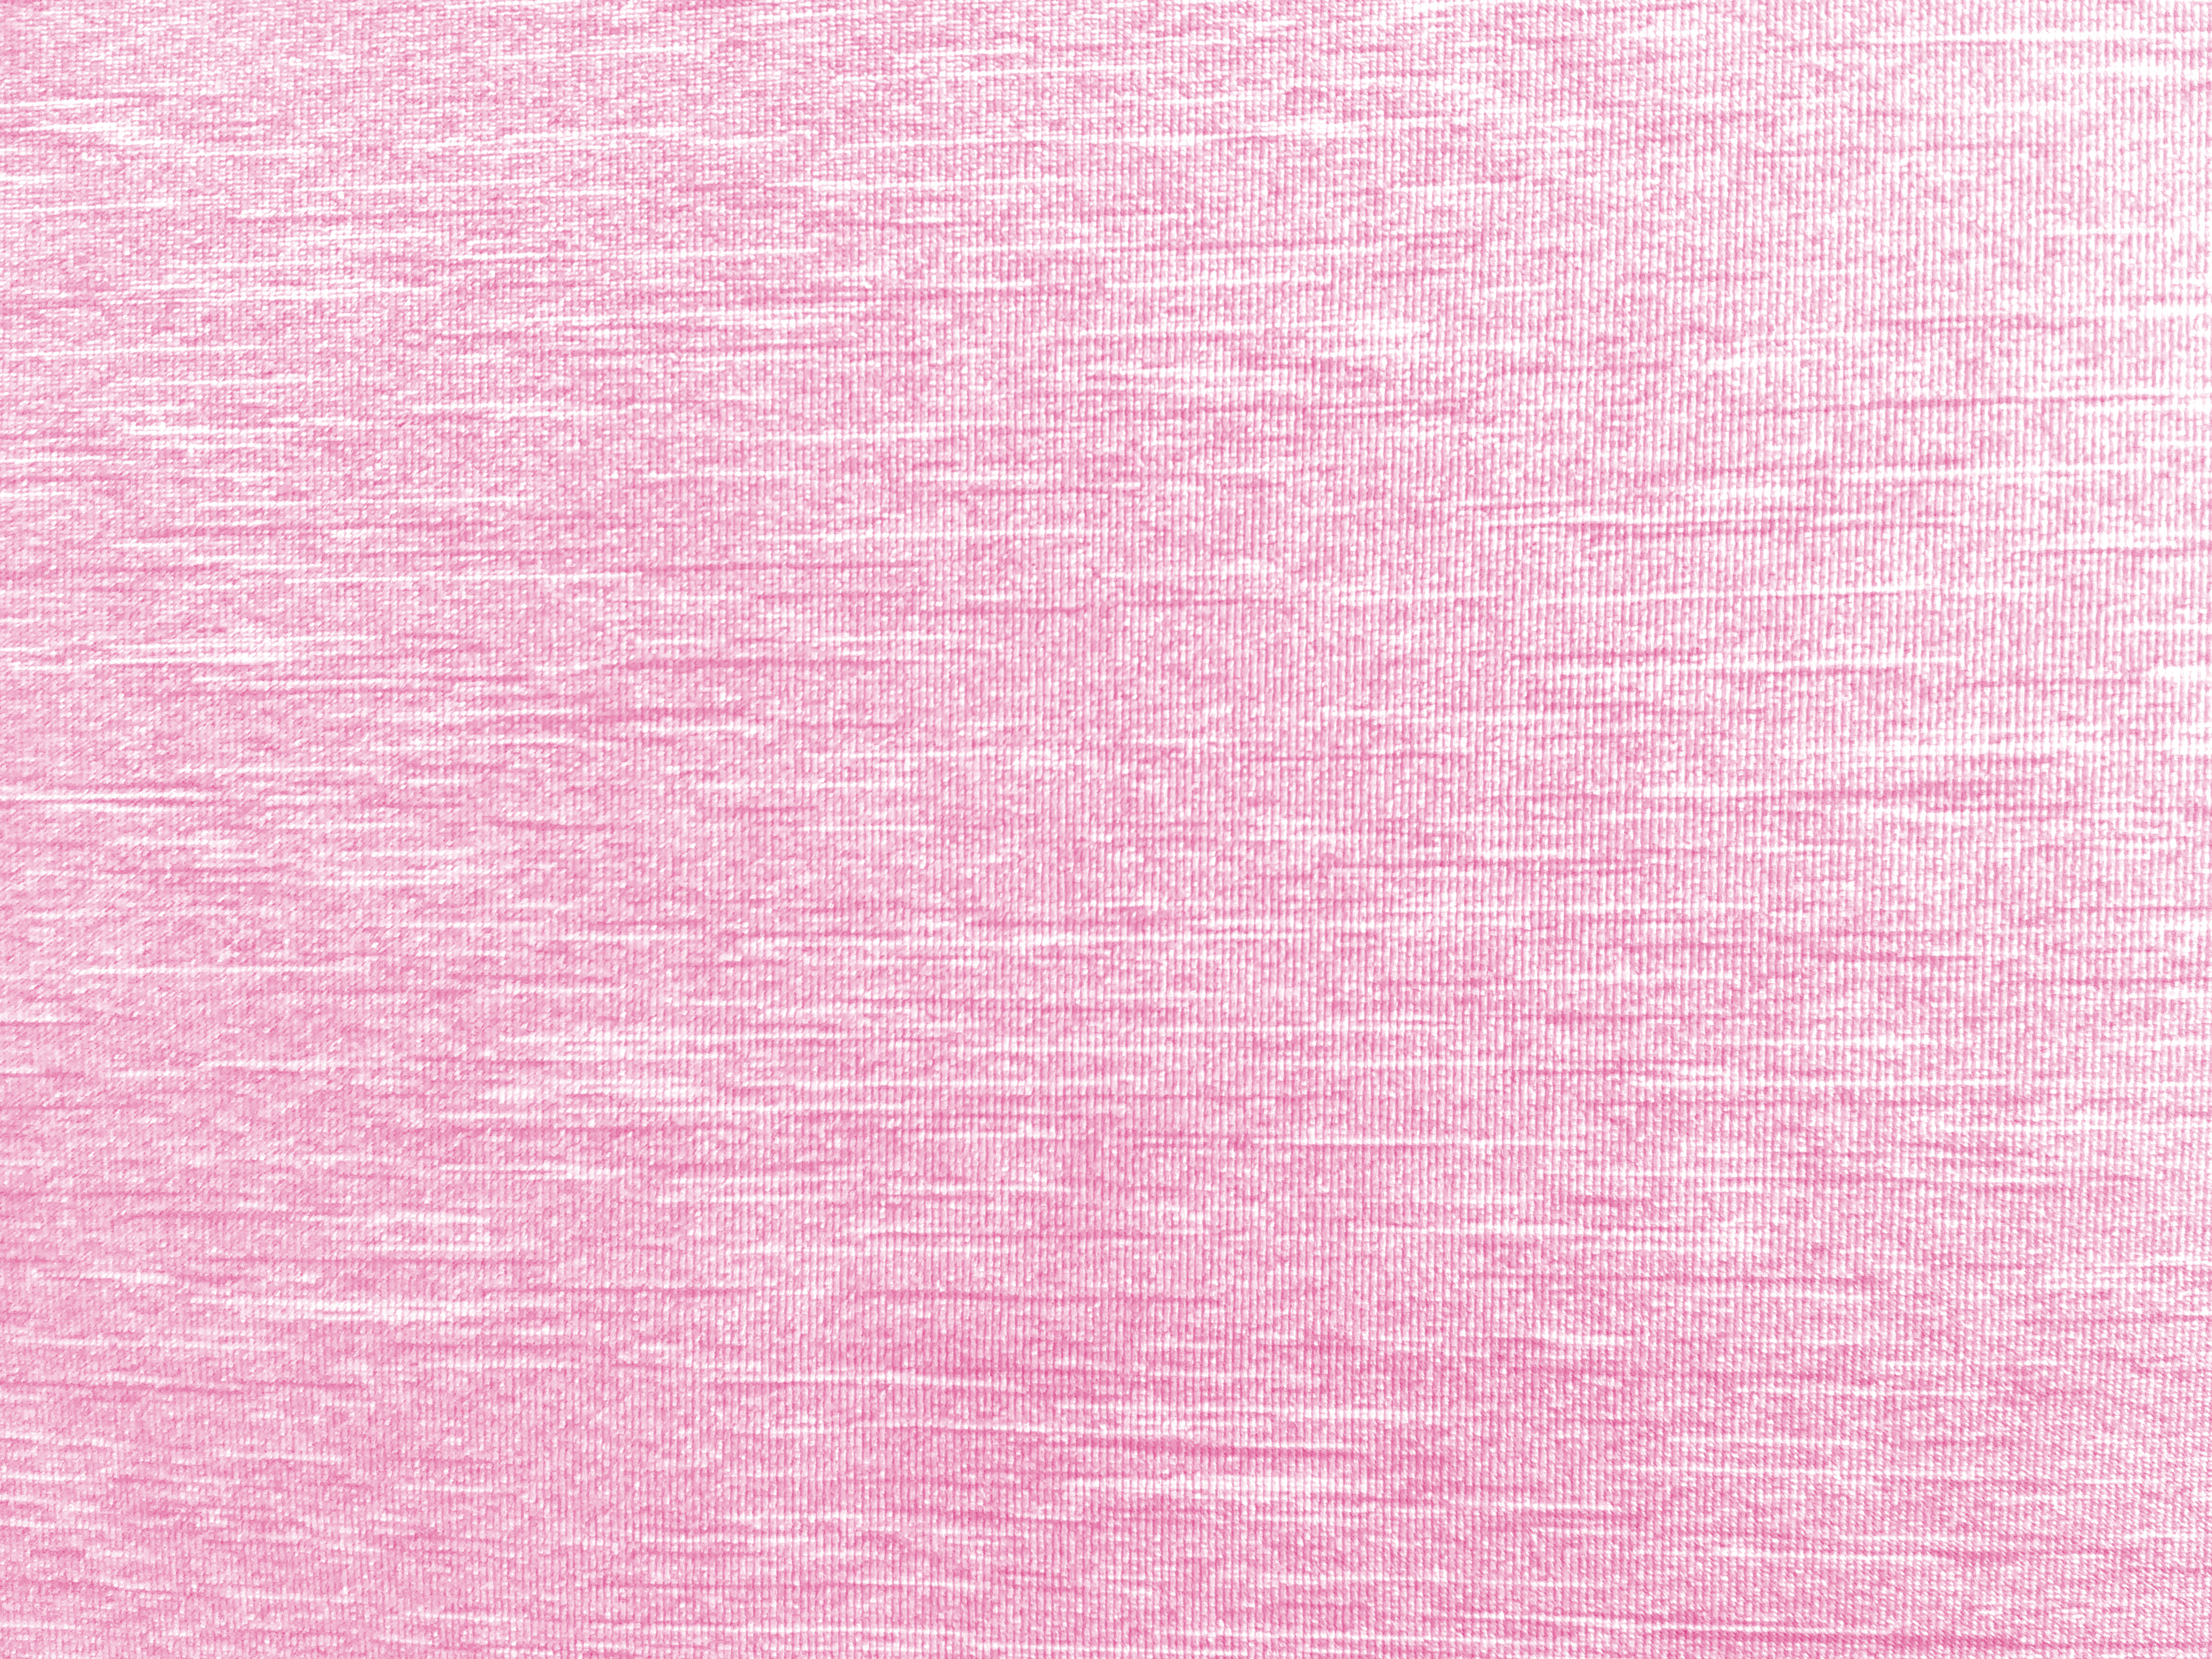 Light Pink Fabric Texture - photos and vectors